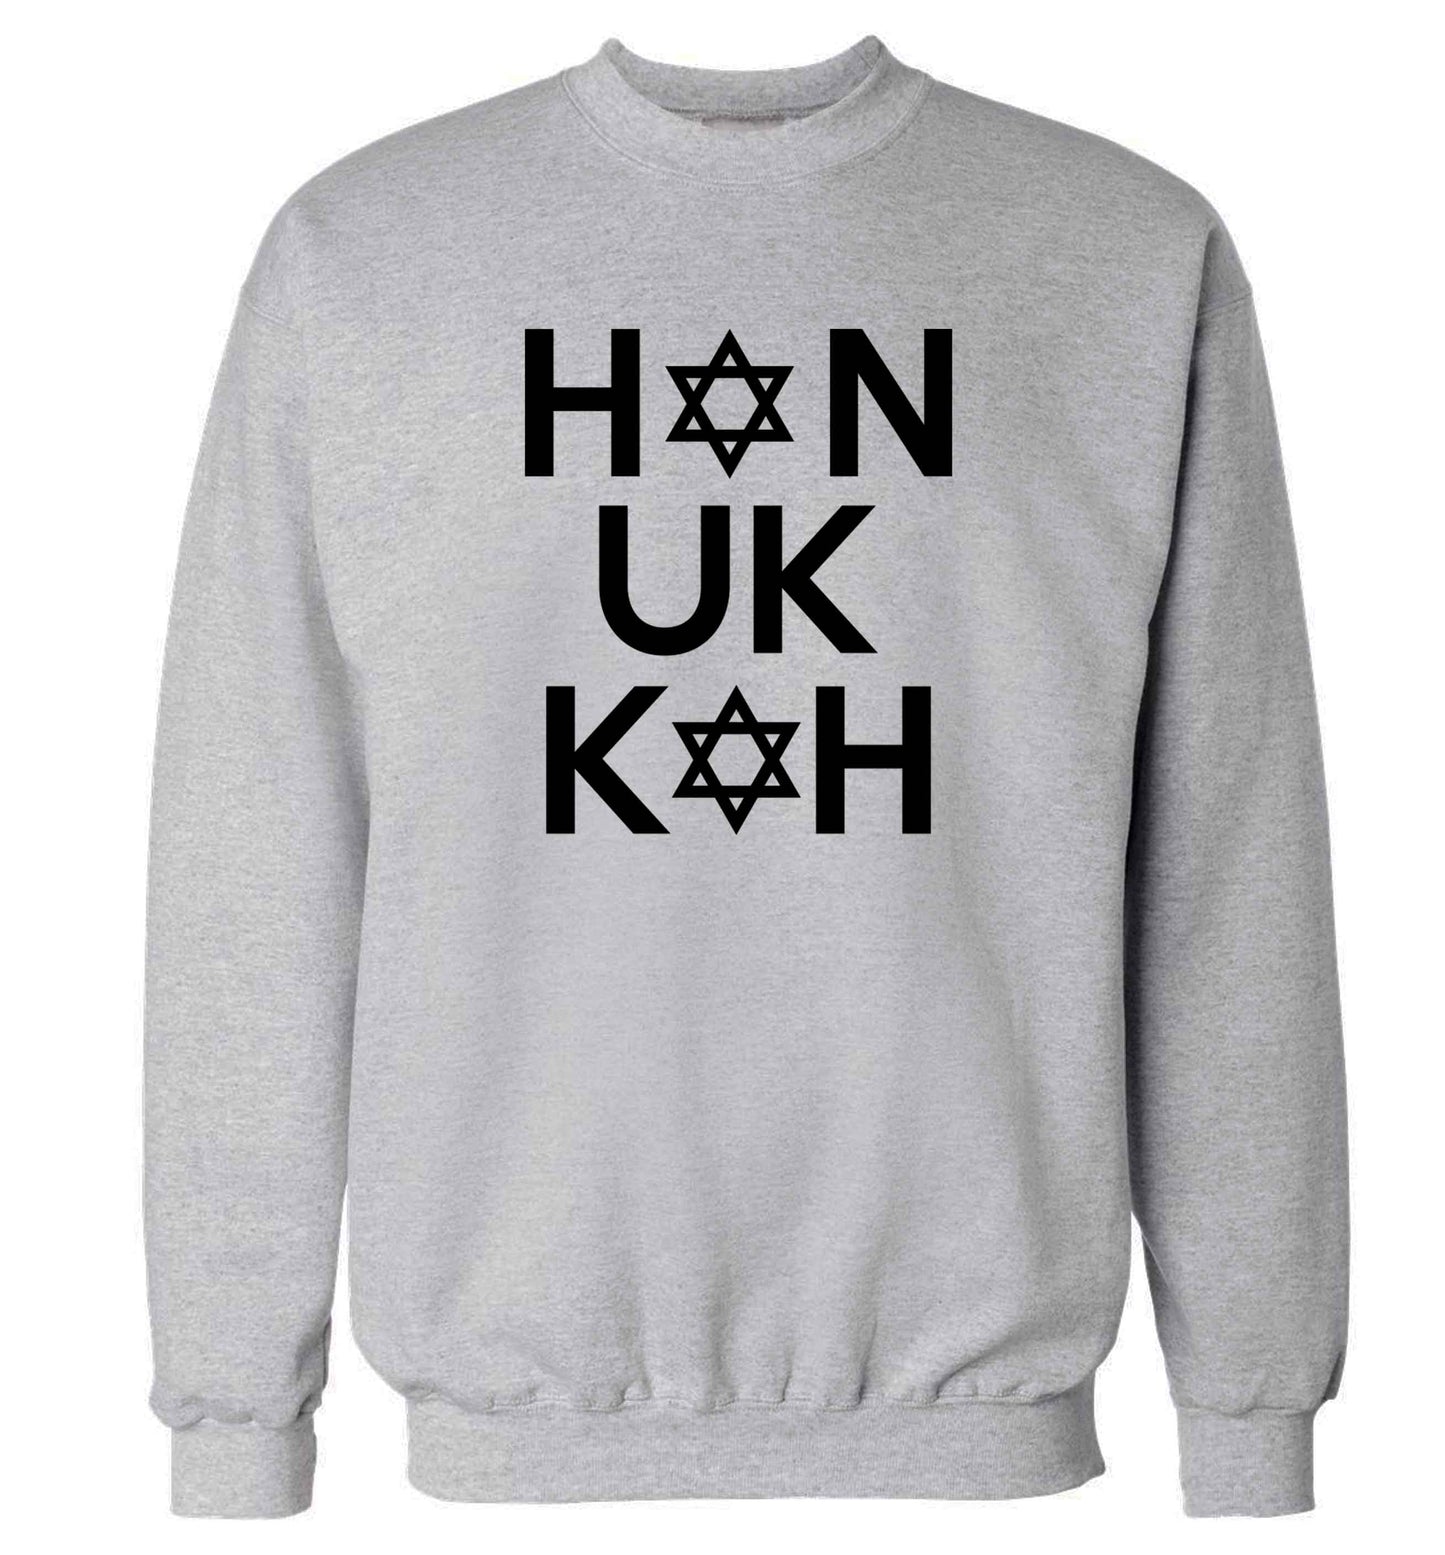 Han uk kah  Hanukkah star of david adult's unisex grey sweater 2XL